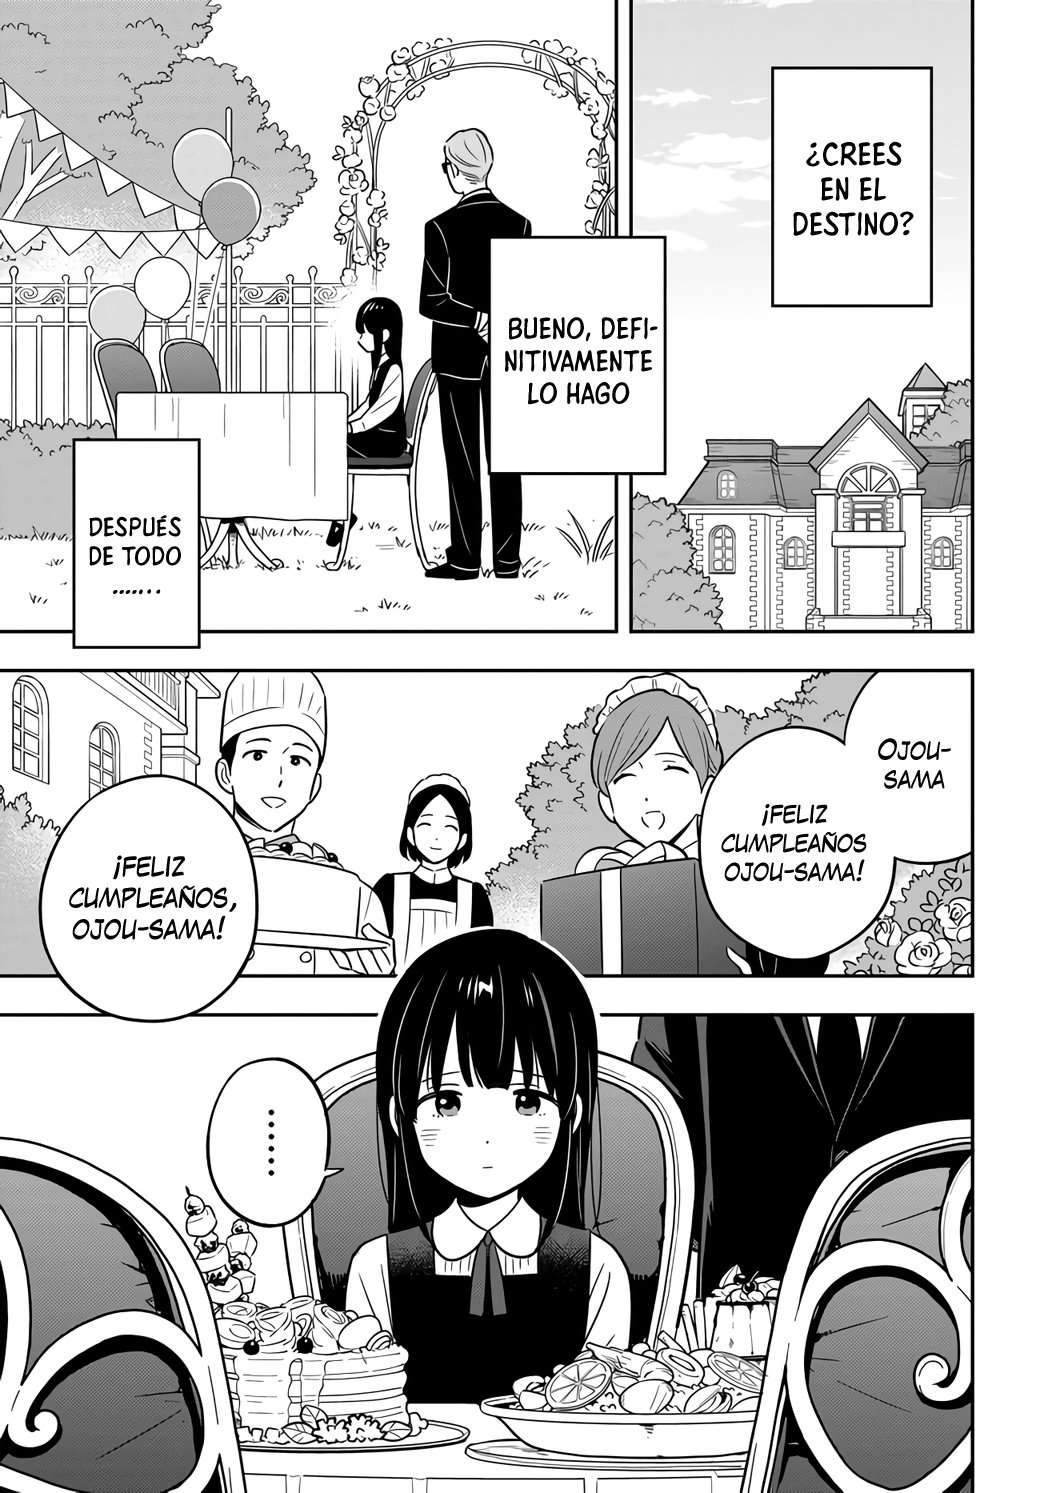 Семья мужа одержима мной 101 глава. I'M A shy and poor Otaku Chapter 2 Manga.